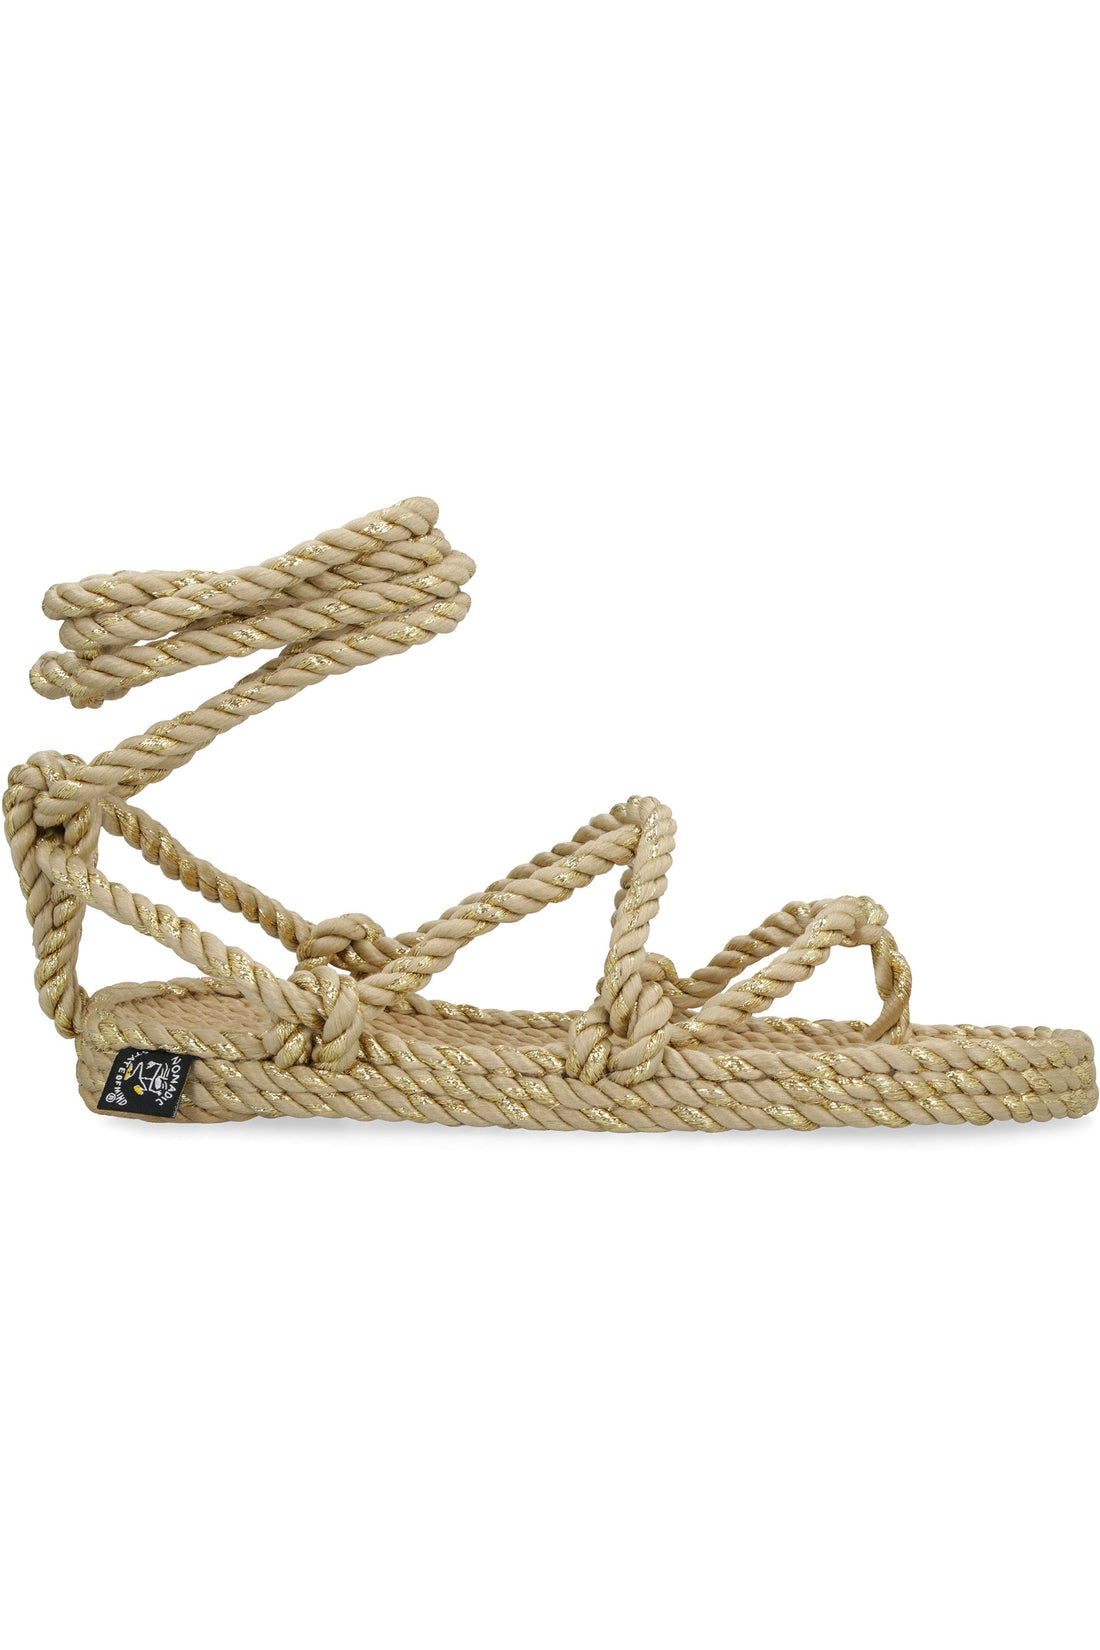 Piralo-OUTLET-SALE-Rope sandals-ARCHIVIST